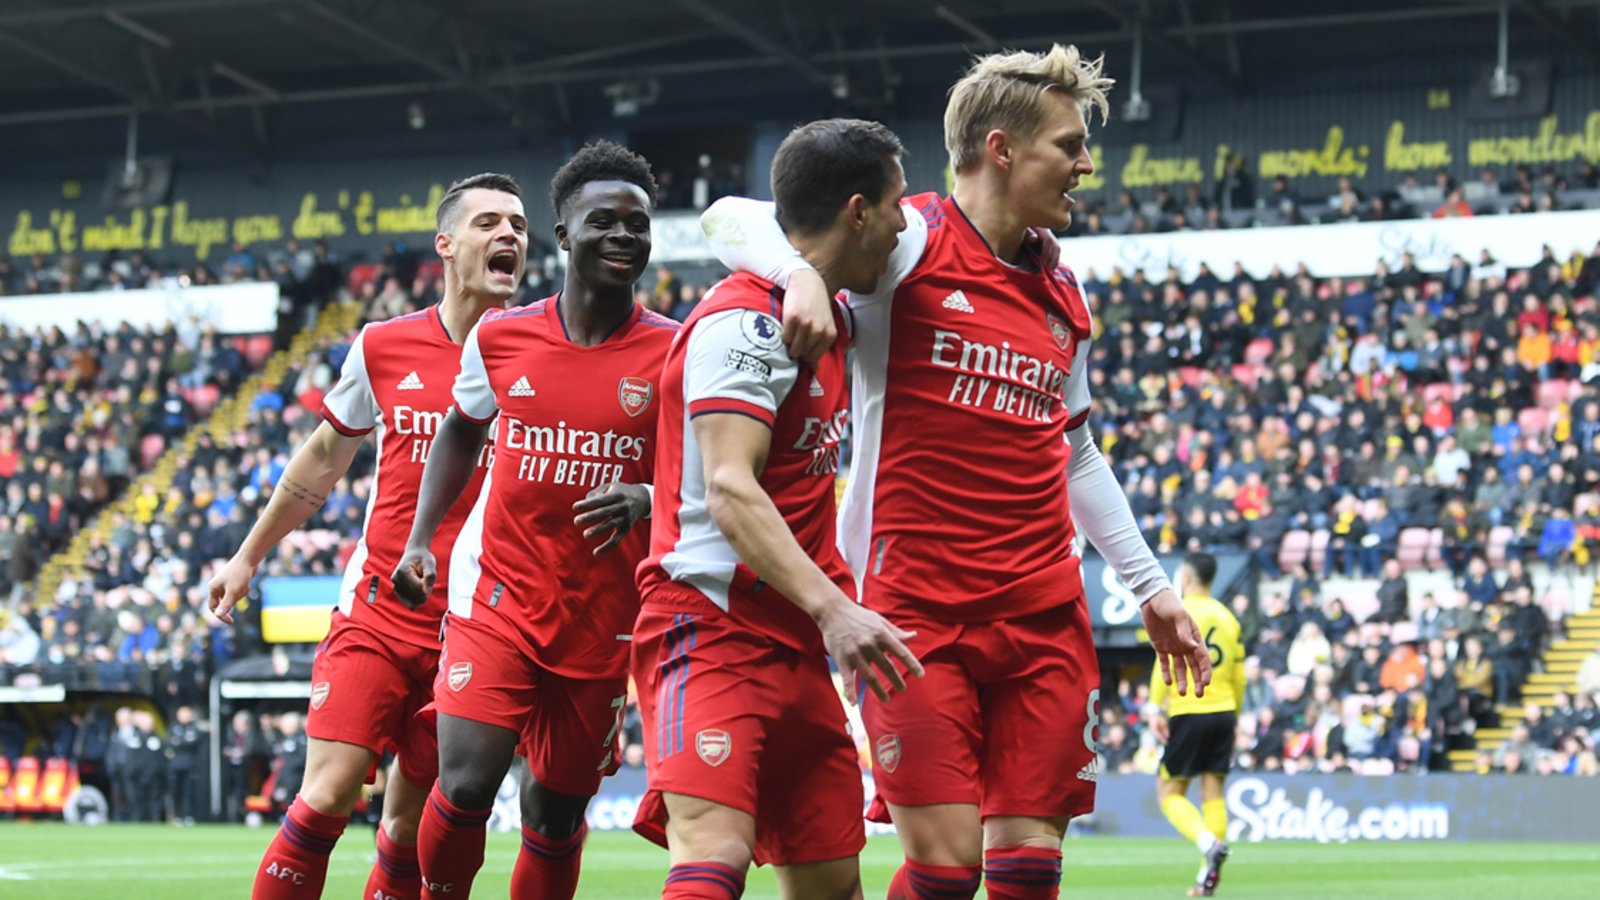 Watford 2 - 3 Arsenal - Match Report | Arsenal.com